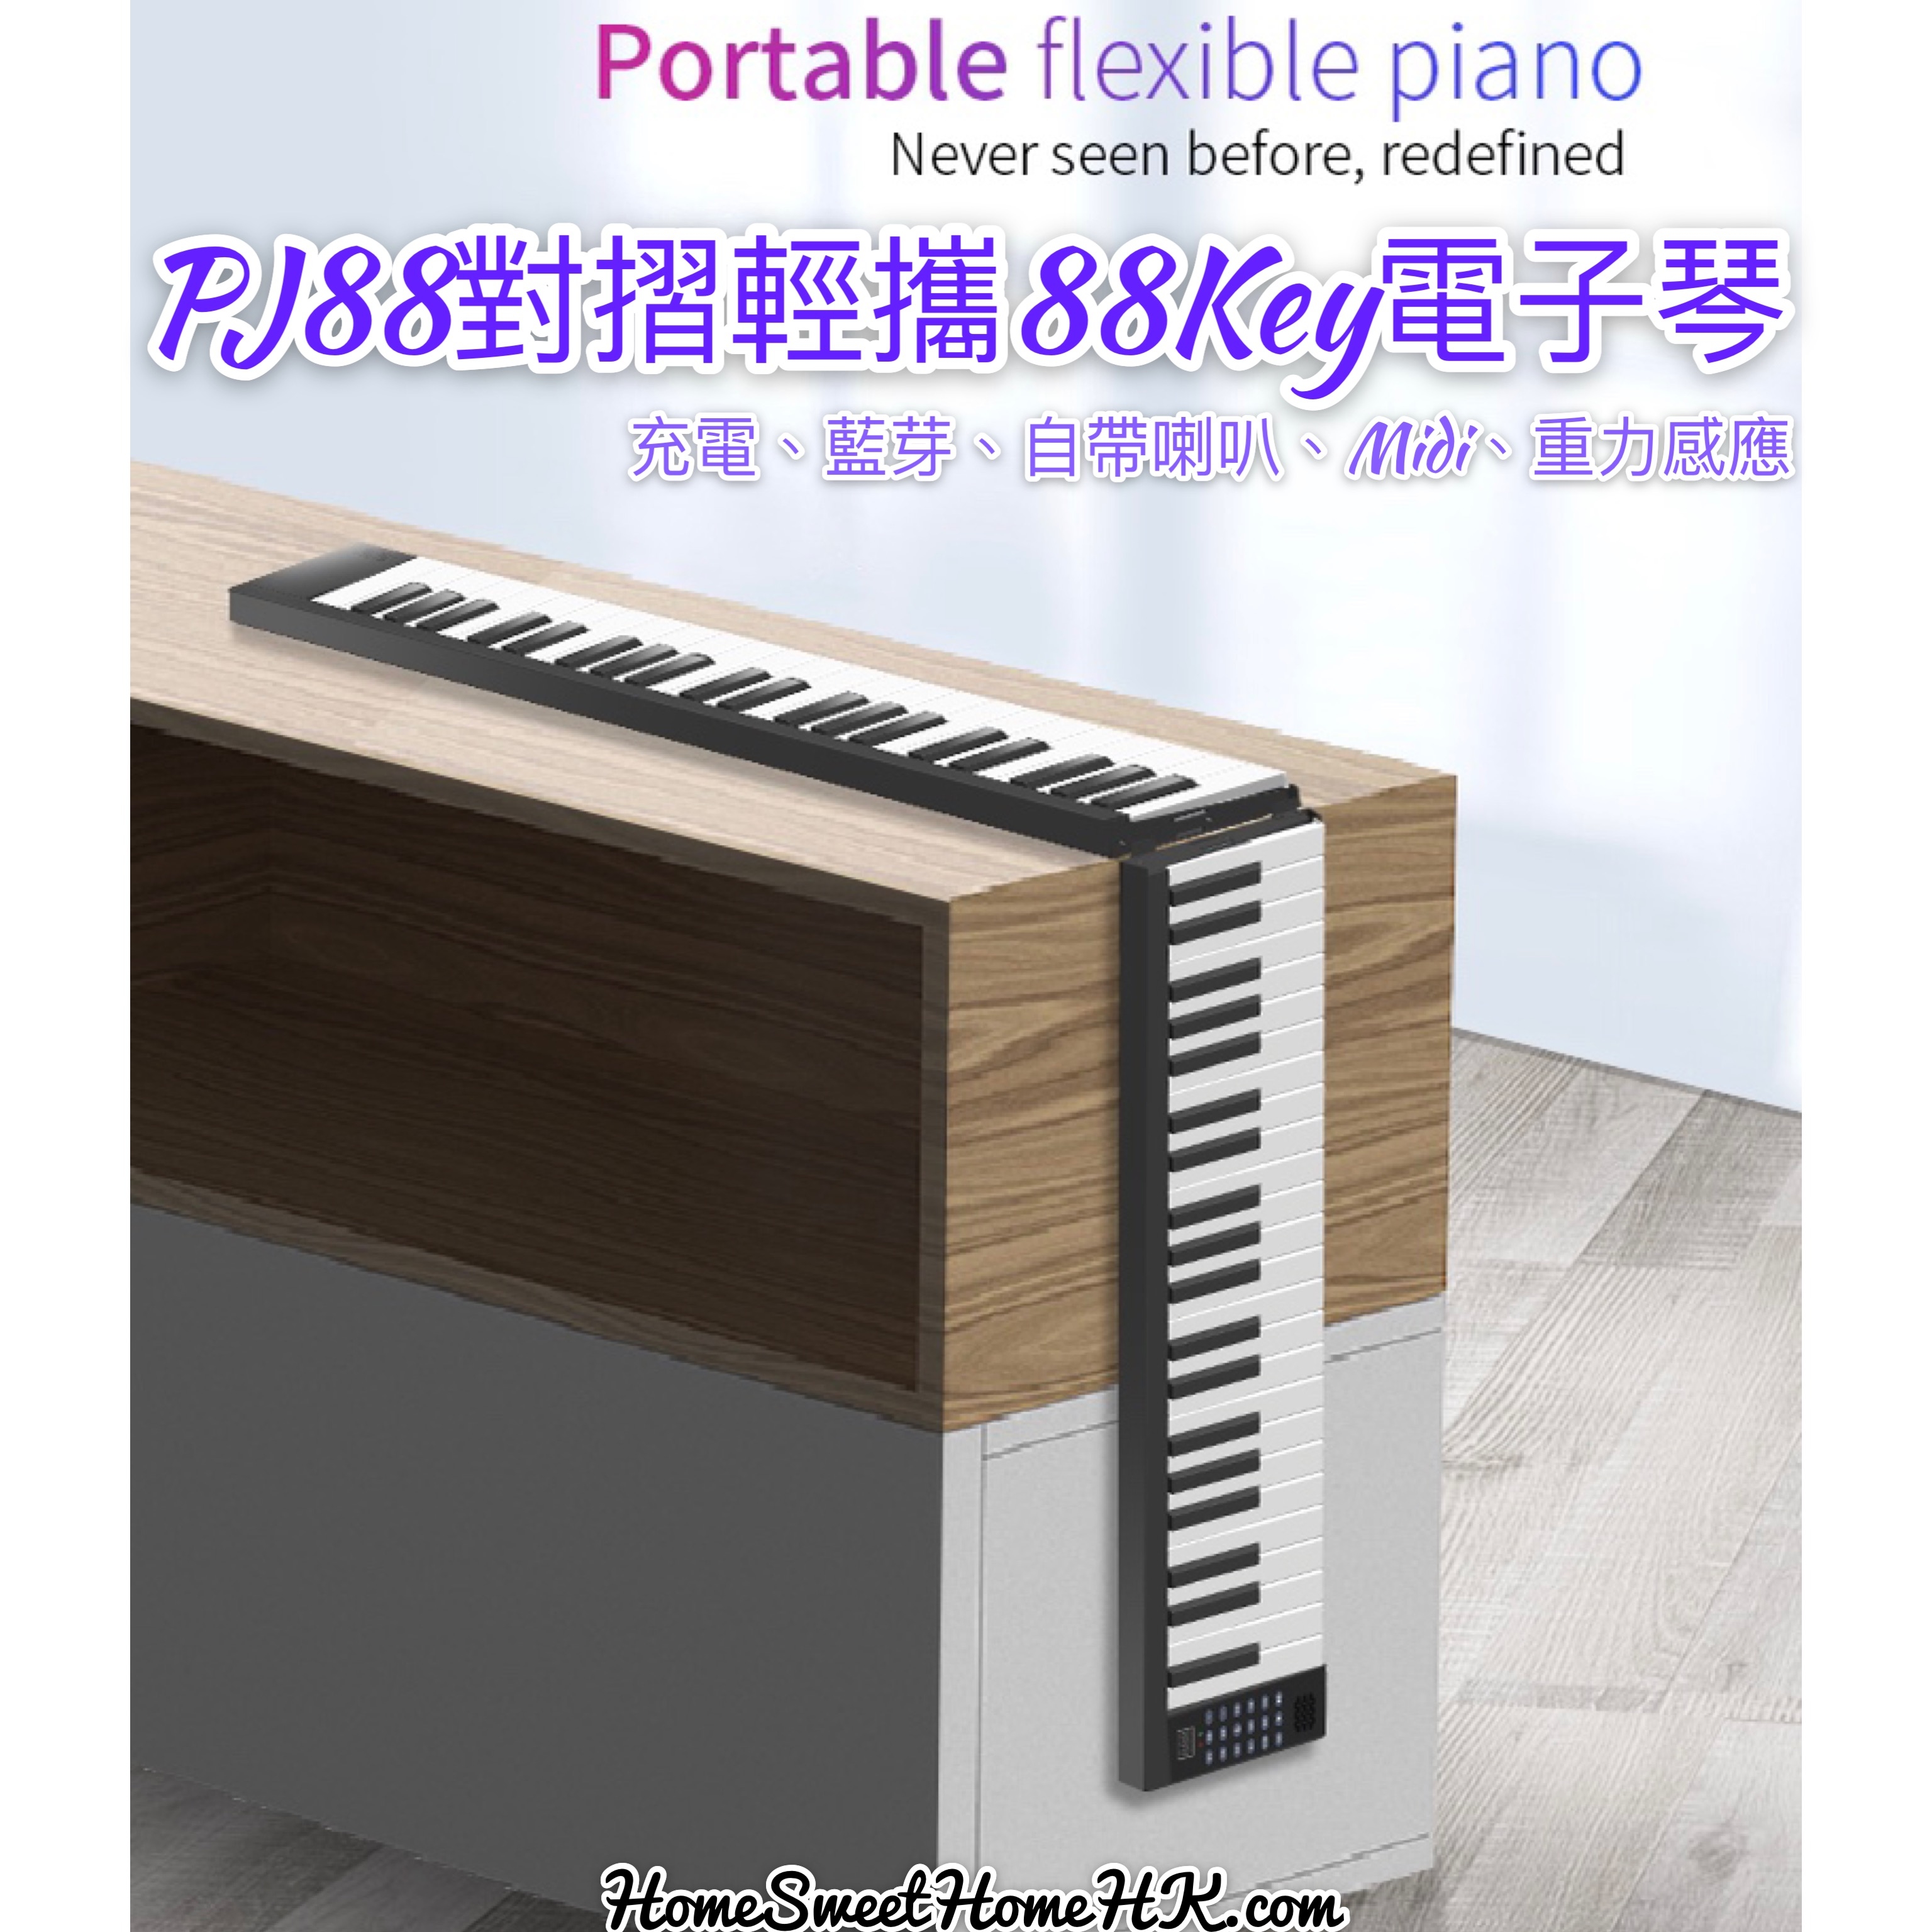 KONIX PJ88可摺疊式智能鋼琴🎹對摺後配搭迷你琴袋  超方便攜帶上山下海 